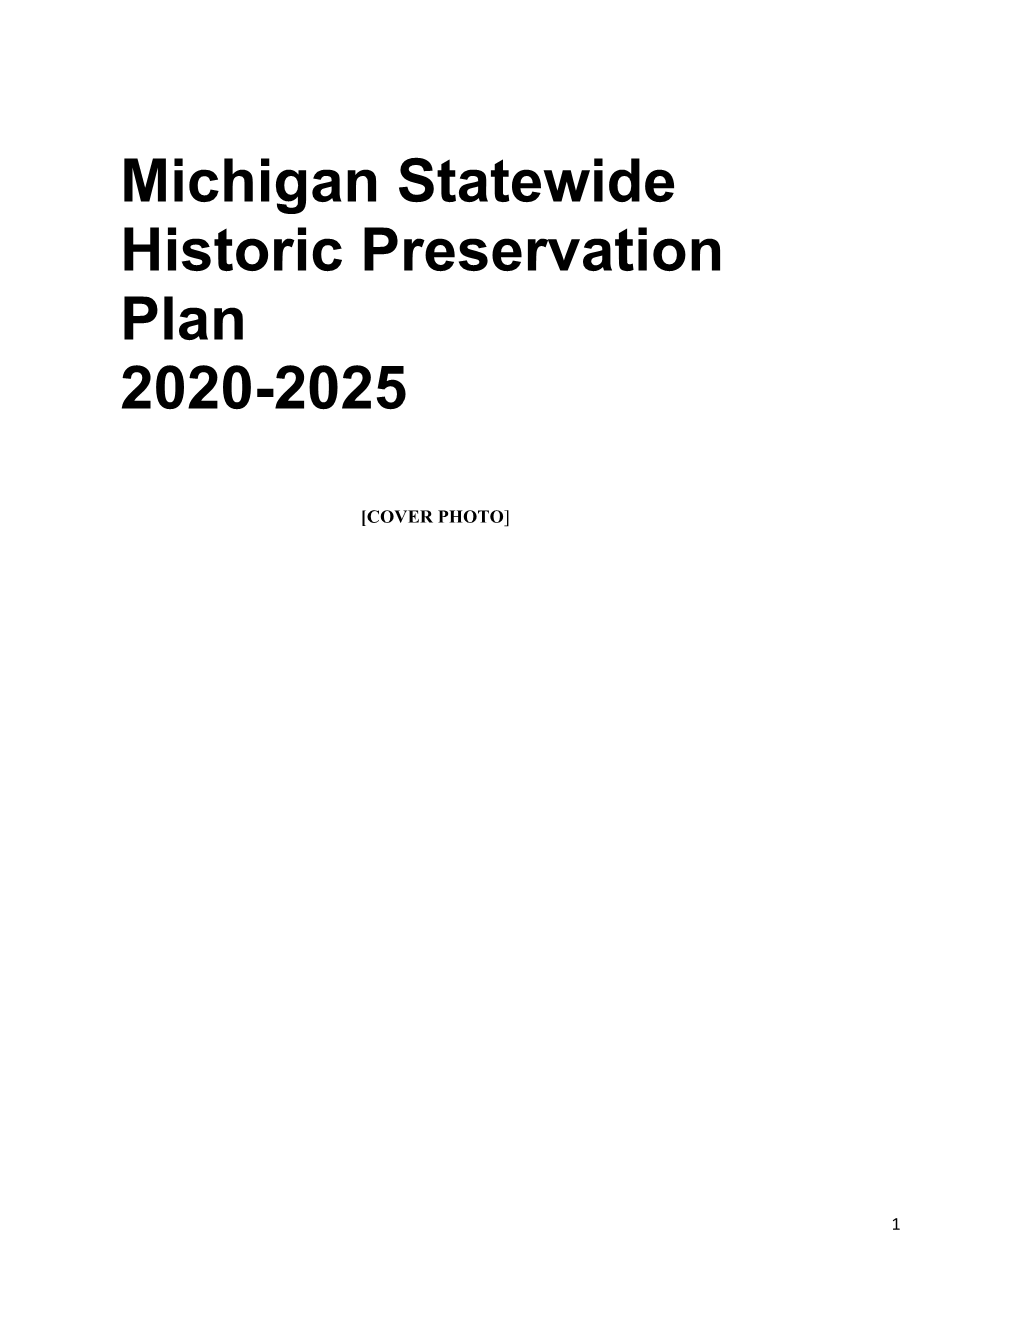 Michigan Statewide Preservation Plan 2020-2025